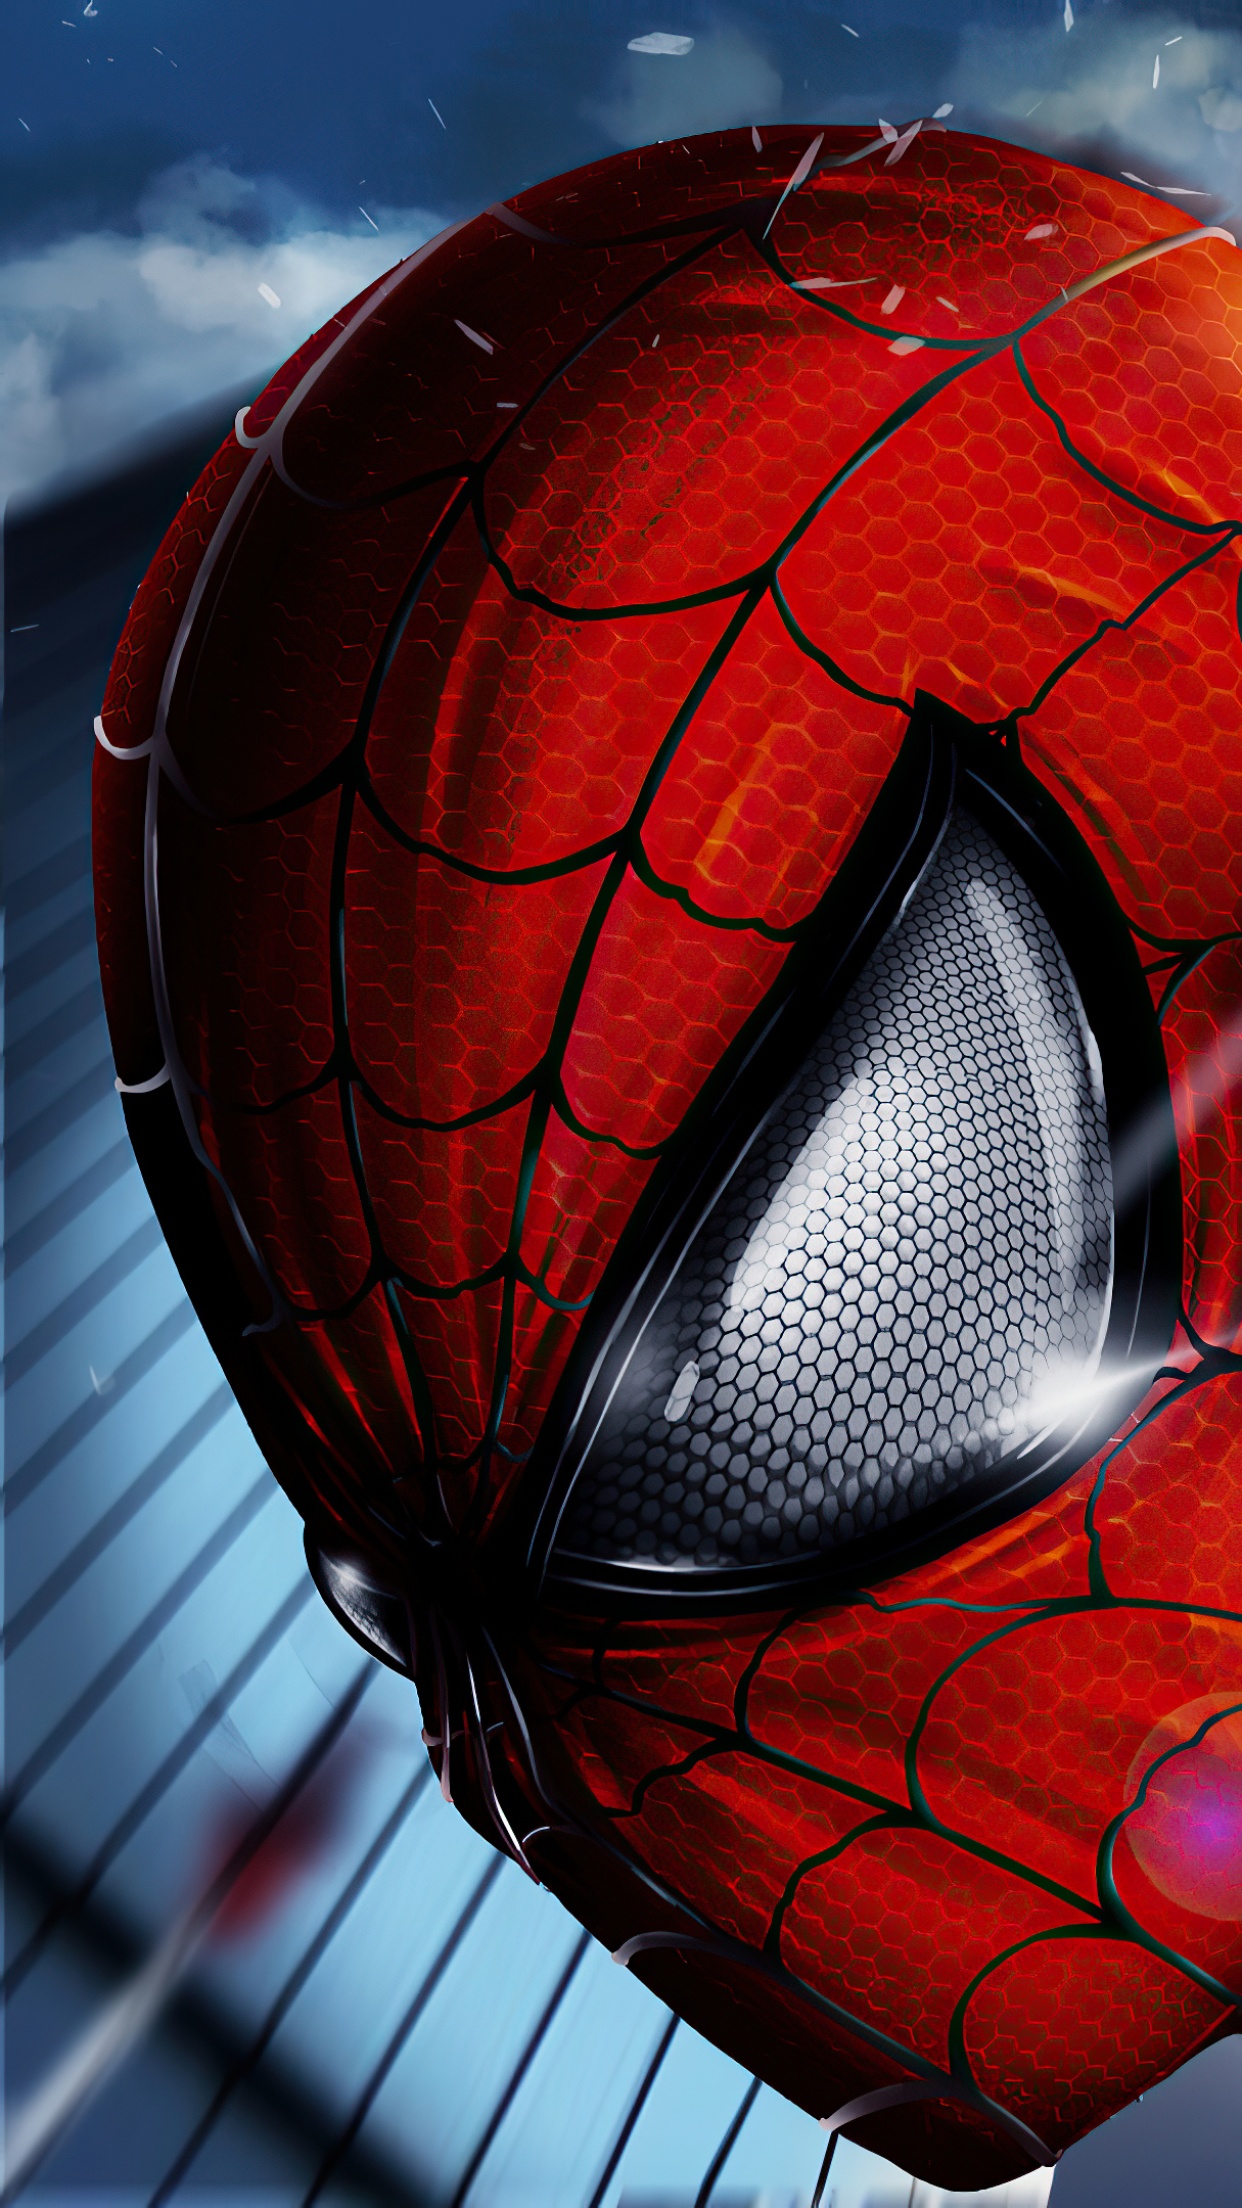 Spider-Man 4K Wallpaper, Marvel Superheroes, Graphics CGI